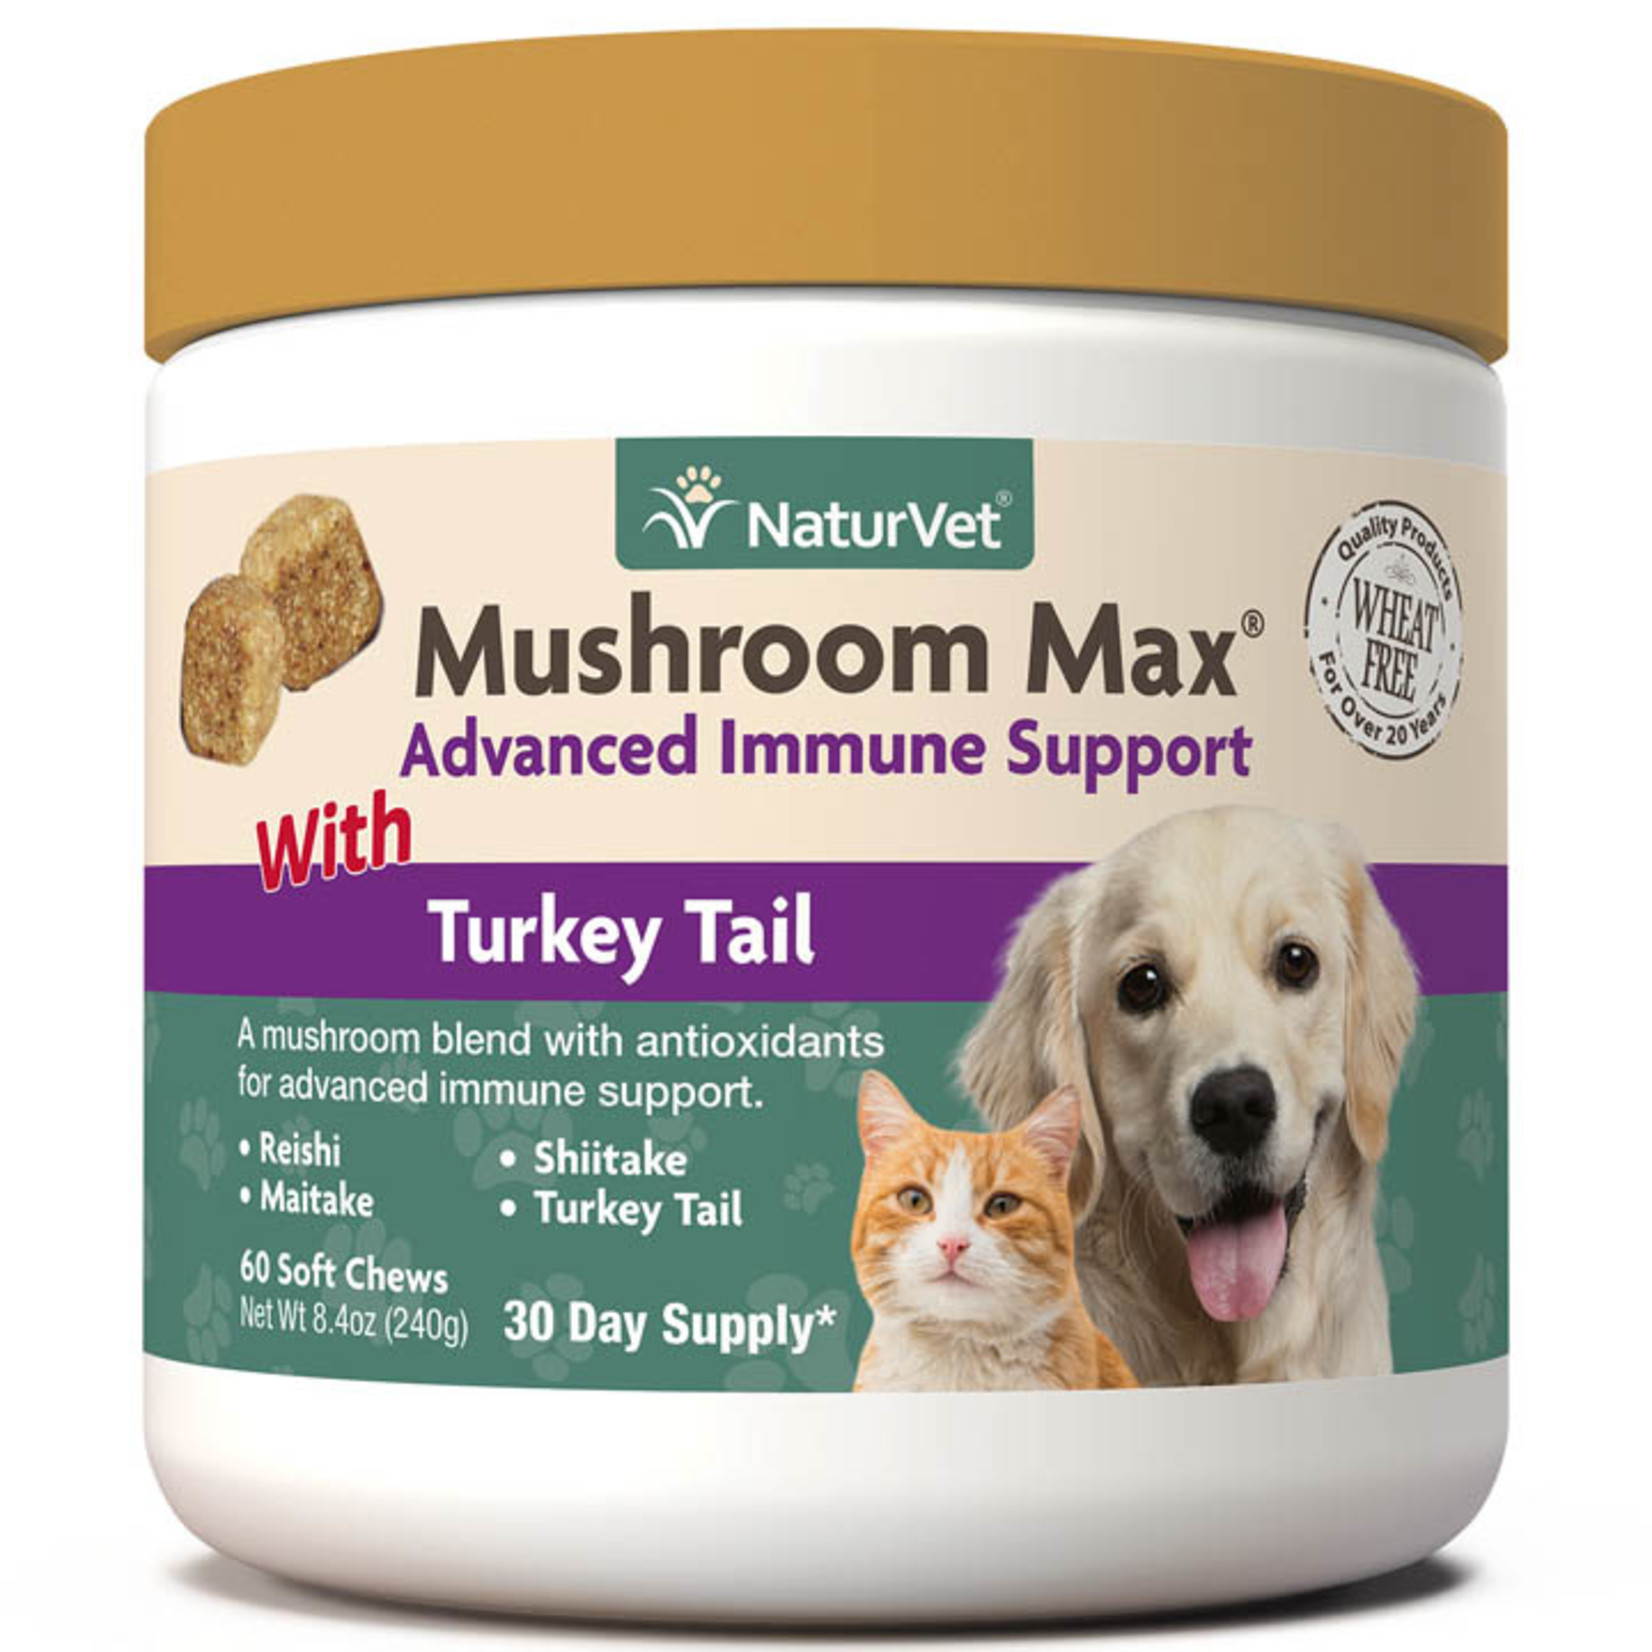 NaturVet NaturVet Mushroom Max Advanced Immune Support with Turkey Tail 60 chews